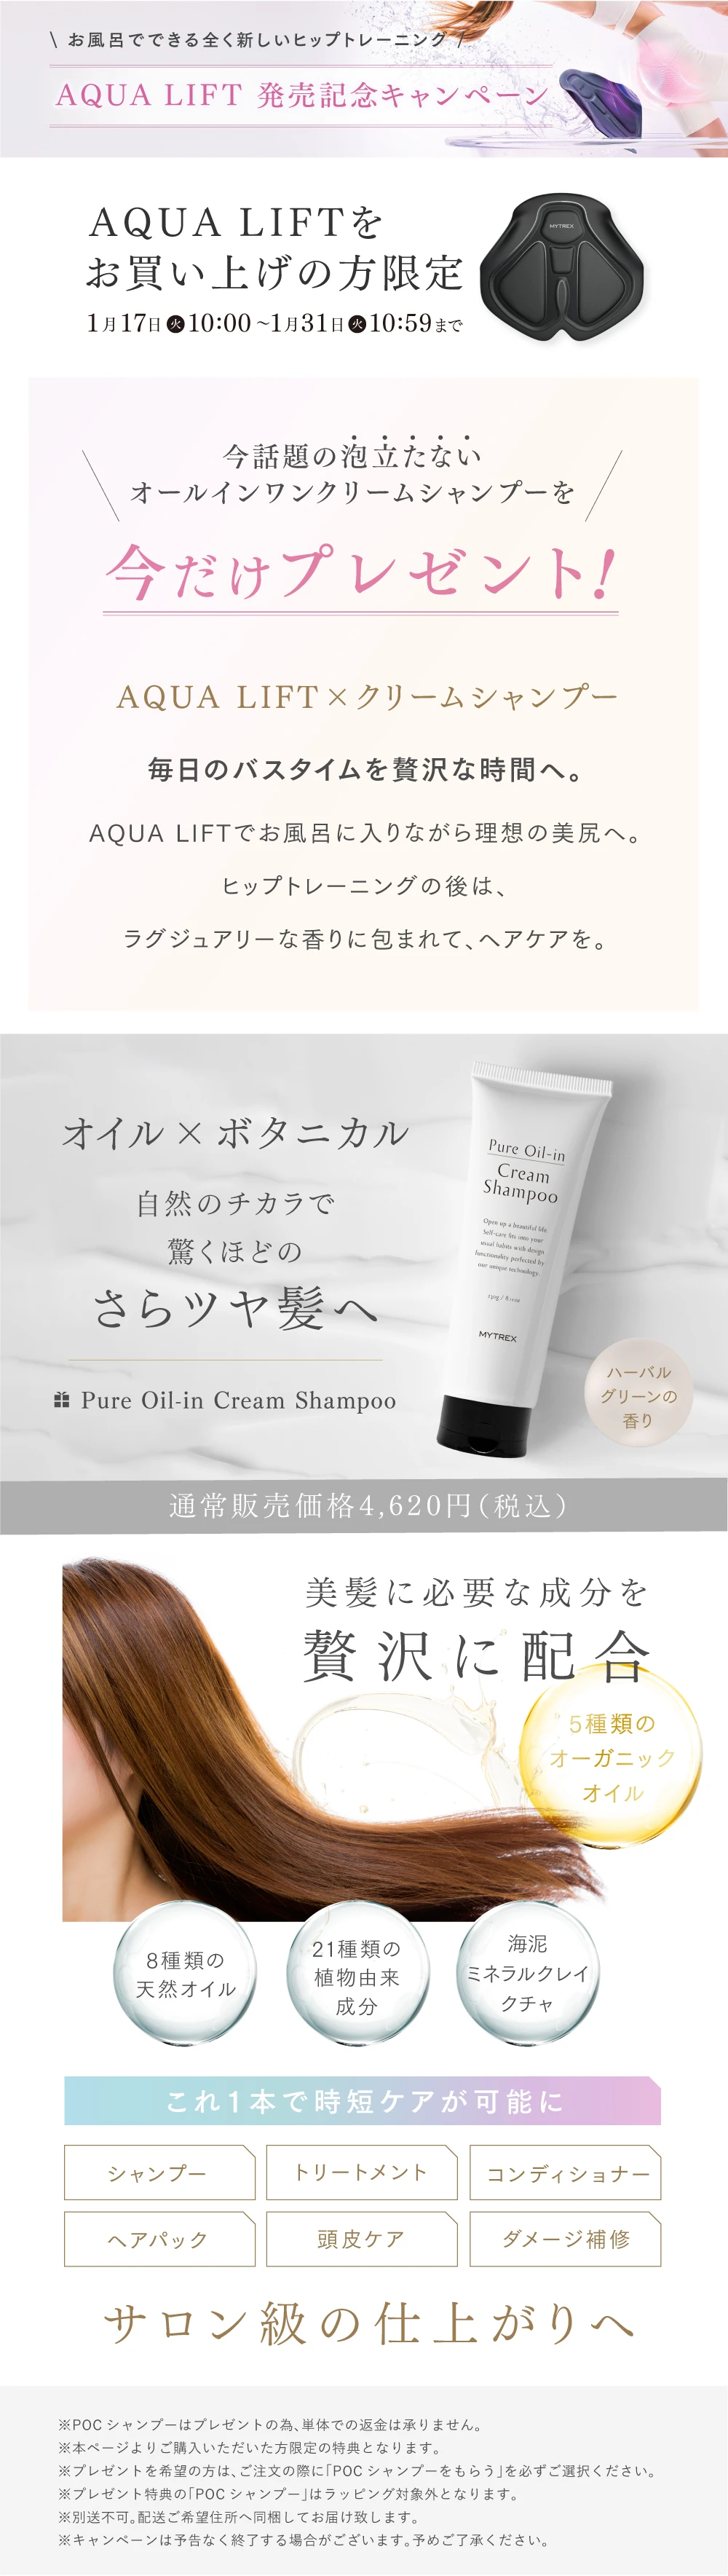 MYTREX Pure Oil-in Cream Shampoo オールインワンクリームシャンプー